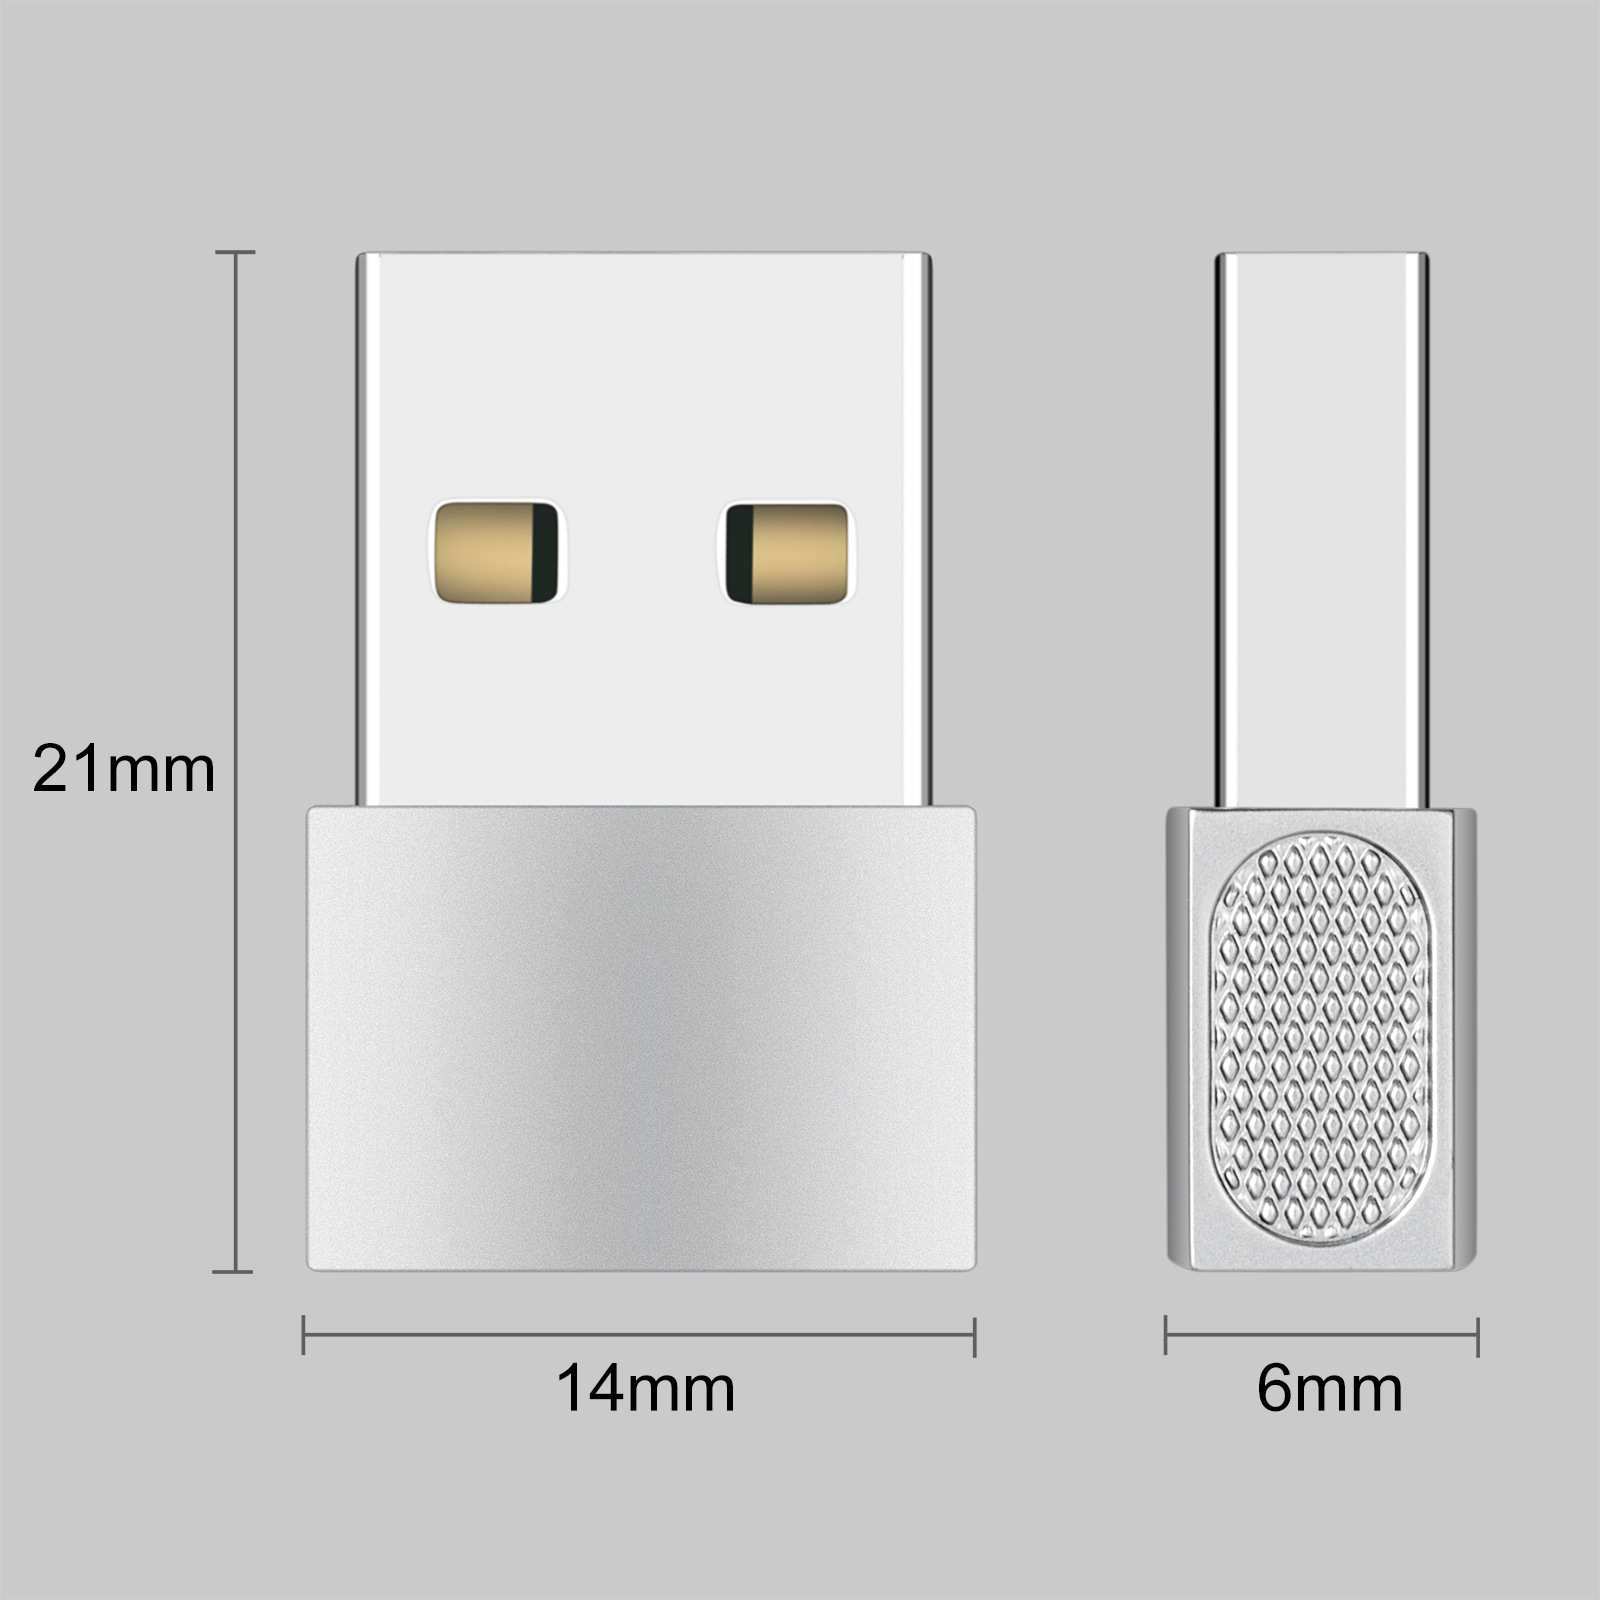 INF USB-C zu USB-Adapter Adapter